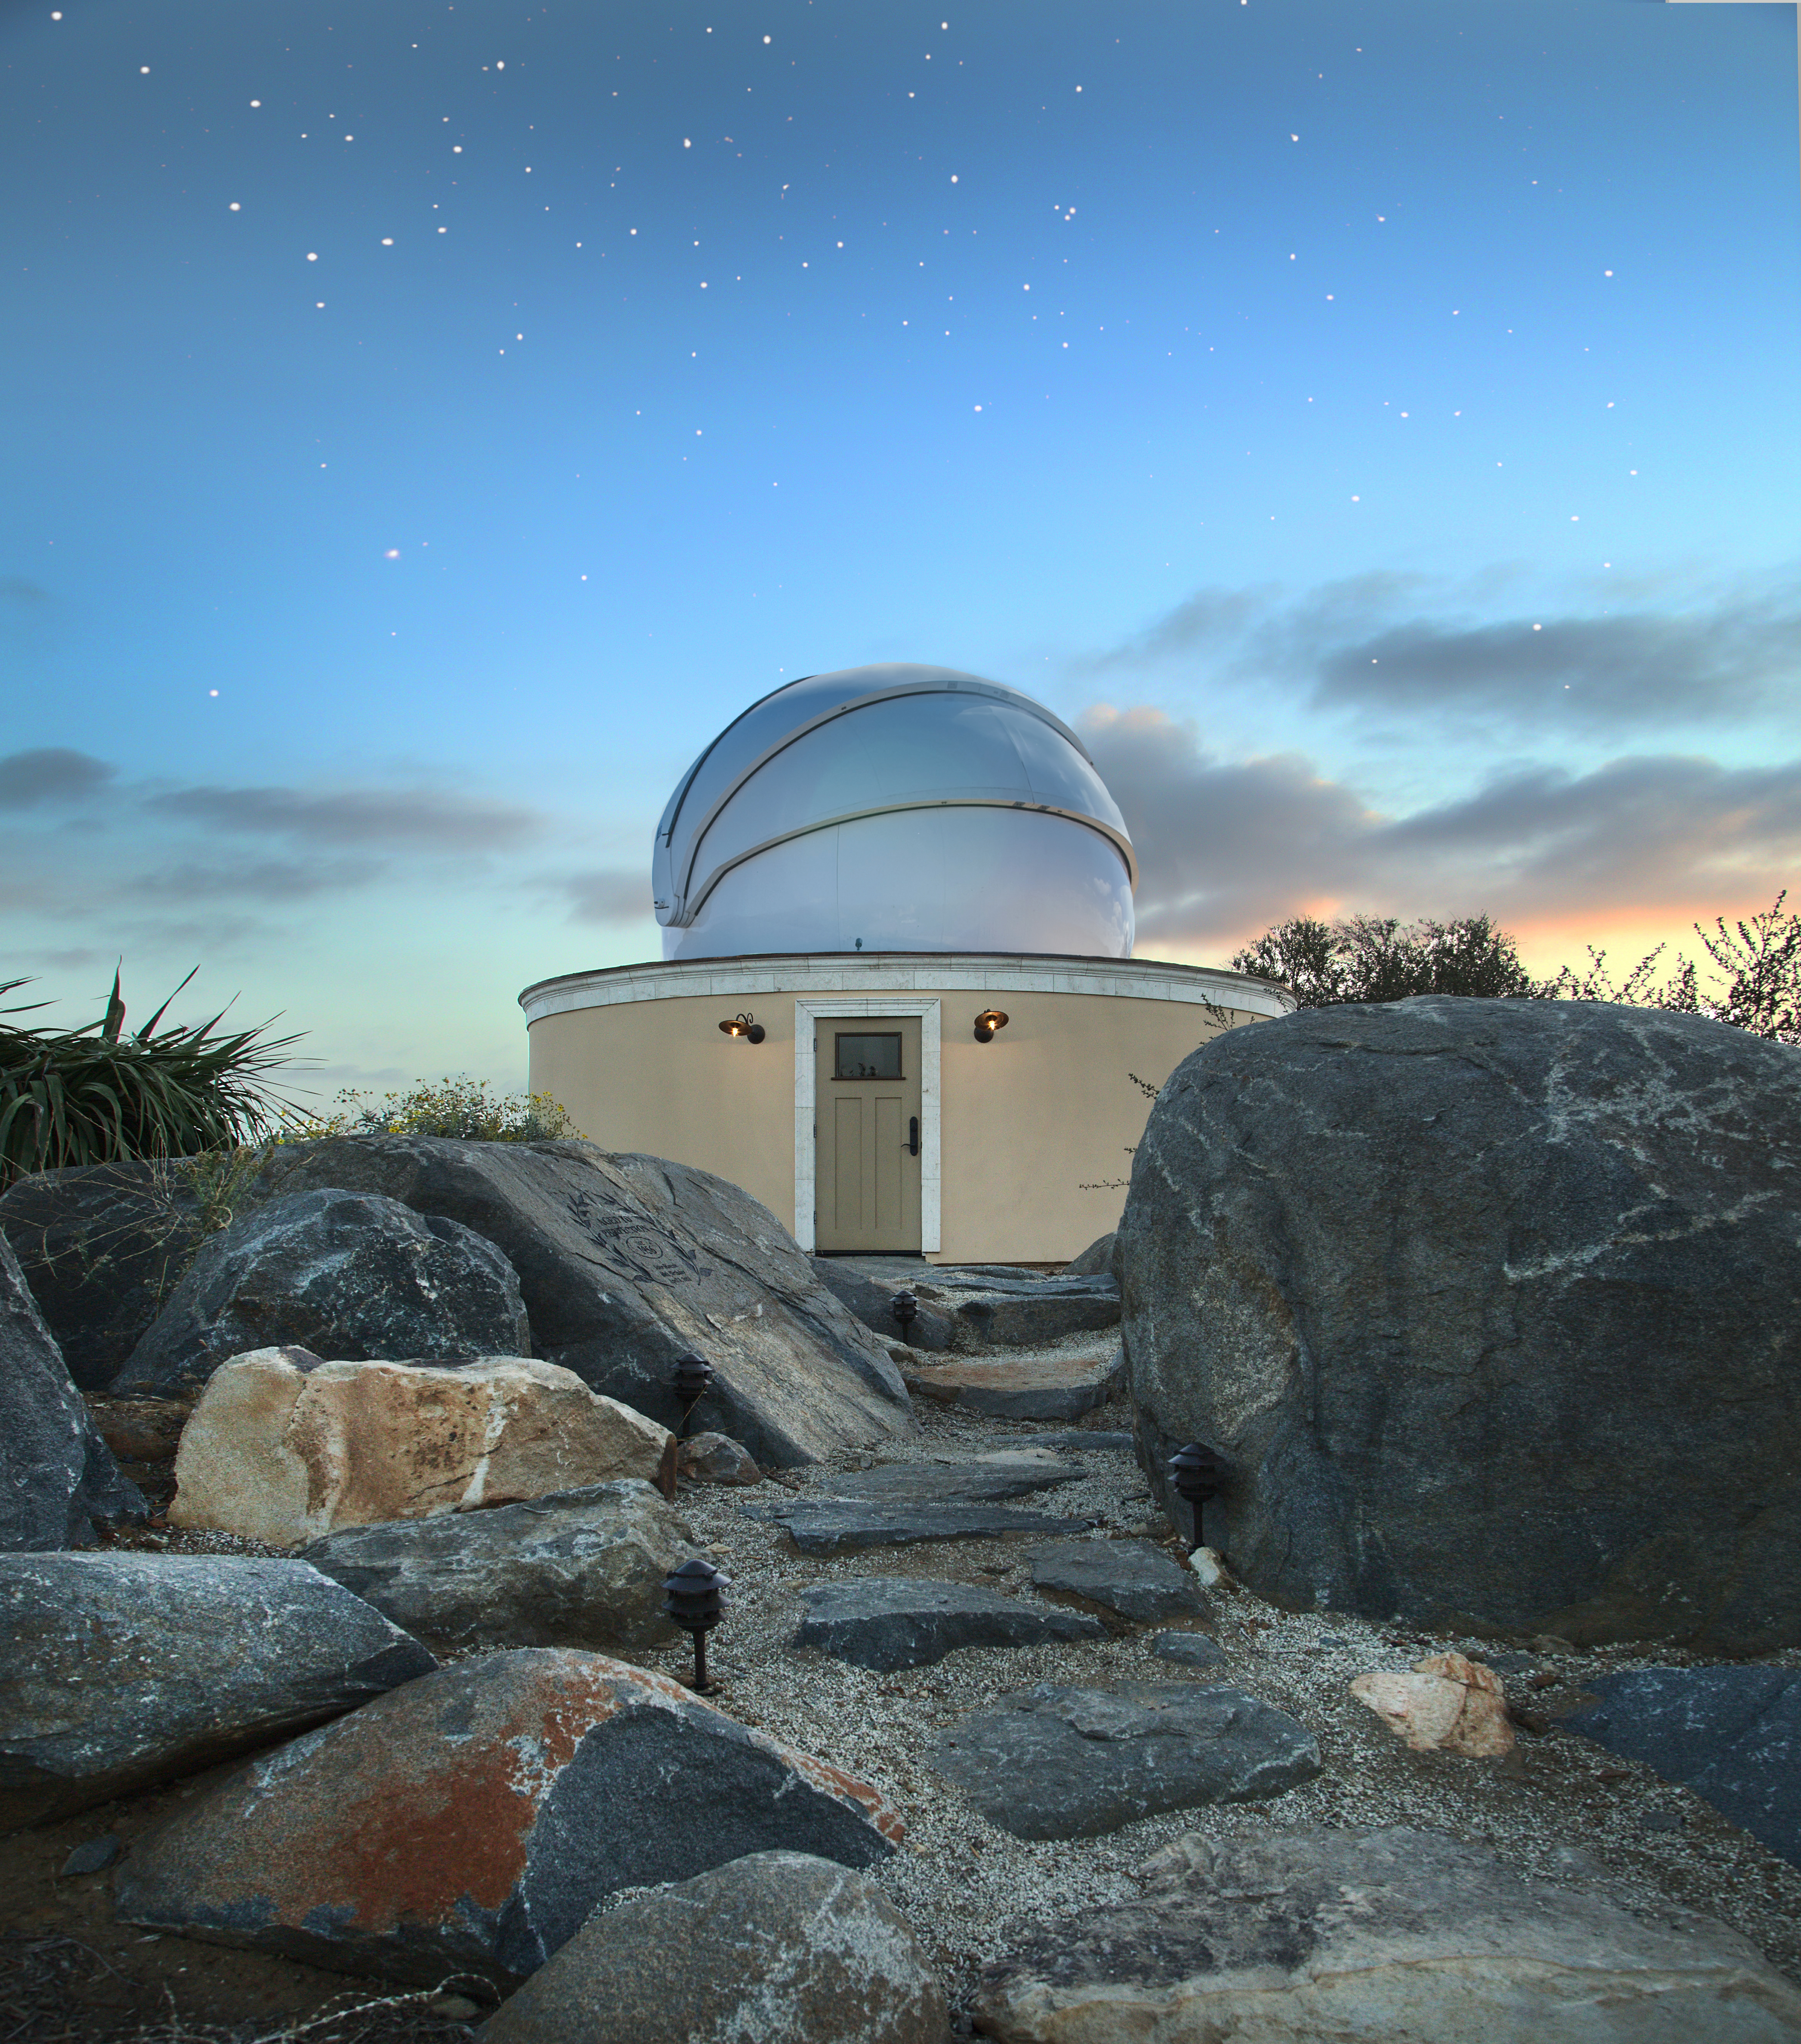 observatory_evening3